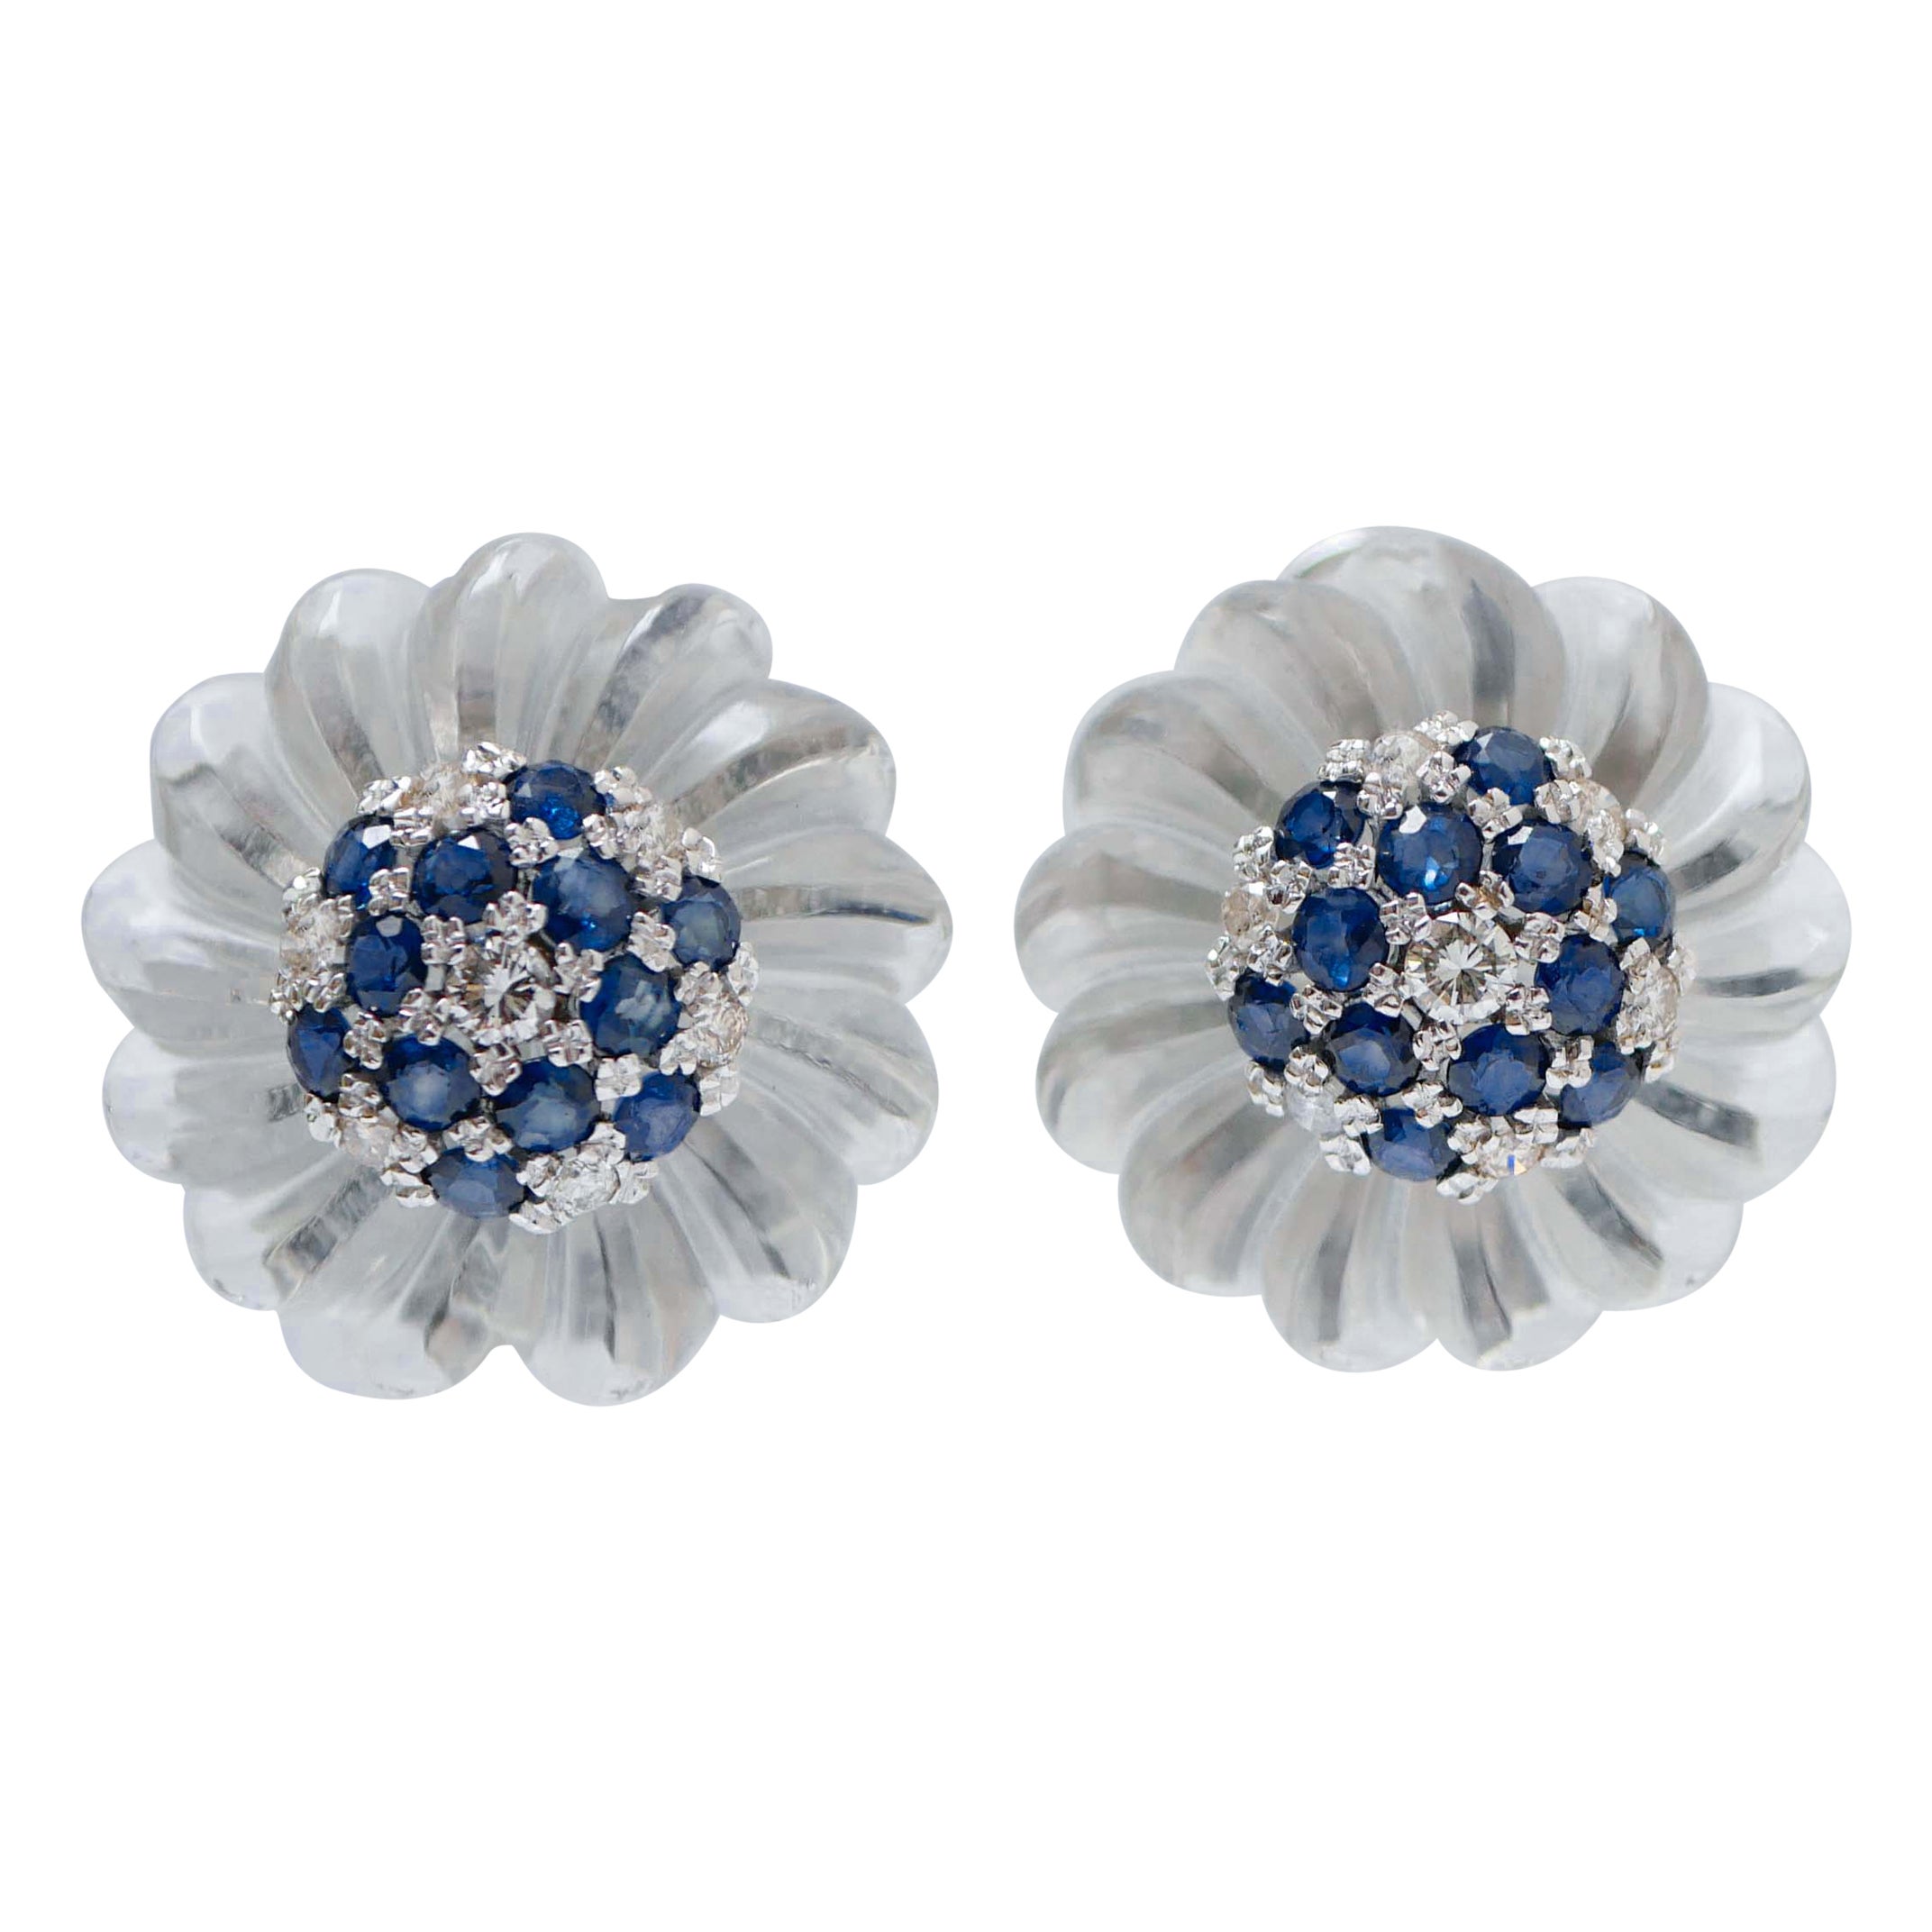 Rock Crystal, Sapphires, Diamonds, 14 Karat White Gold Earrings. For Sale